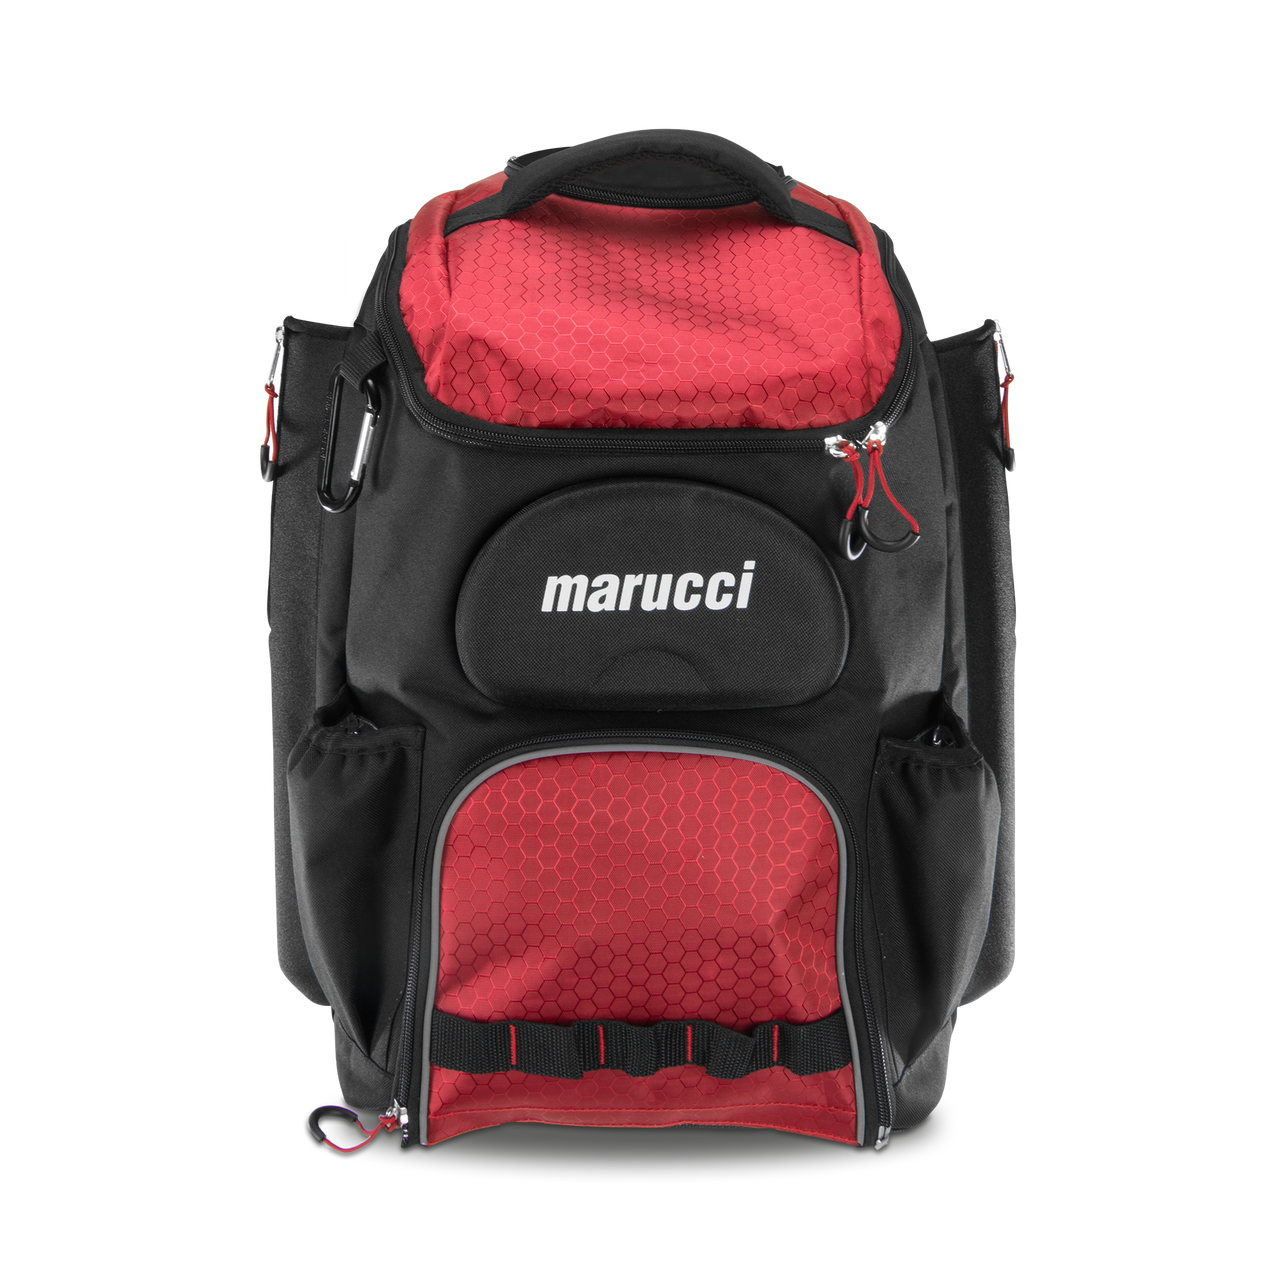 Marucci Axle Wheeled Bat Pack